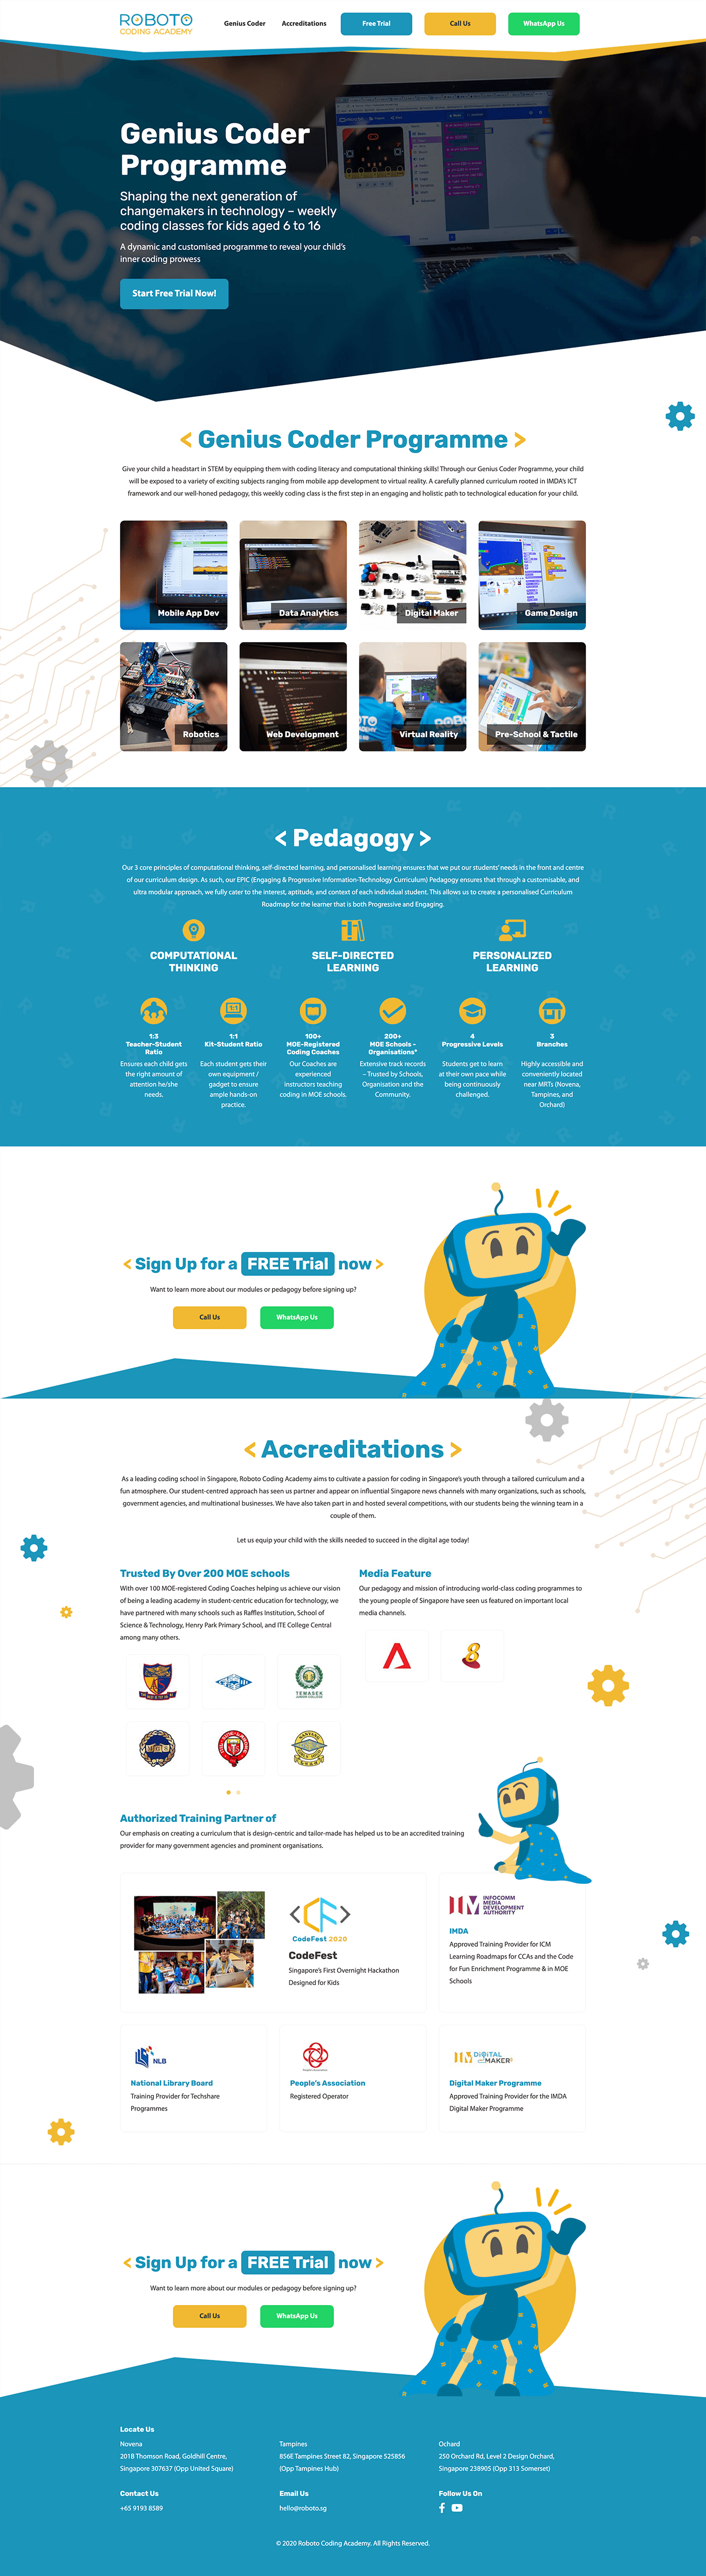 Roboto Coding Academy web page